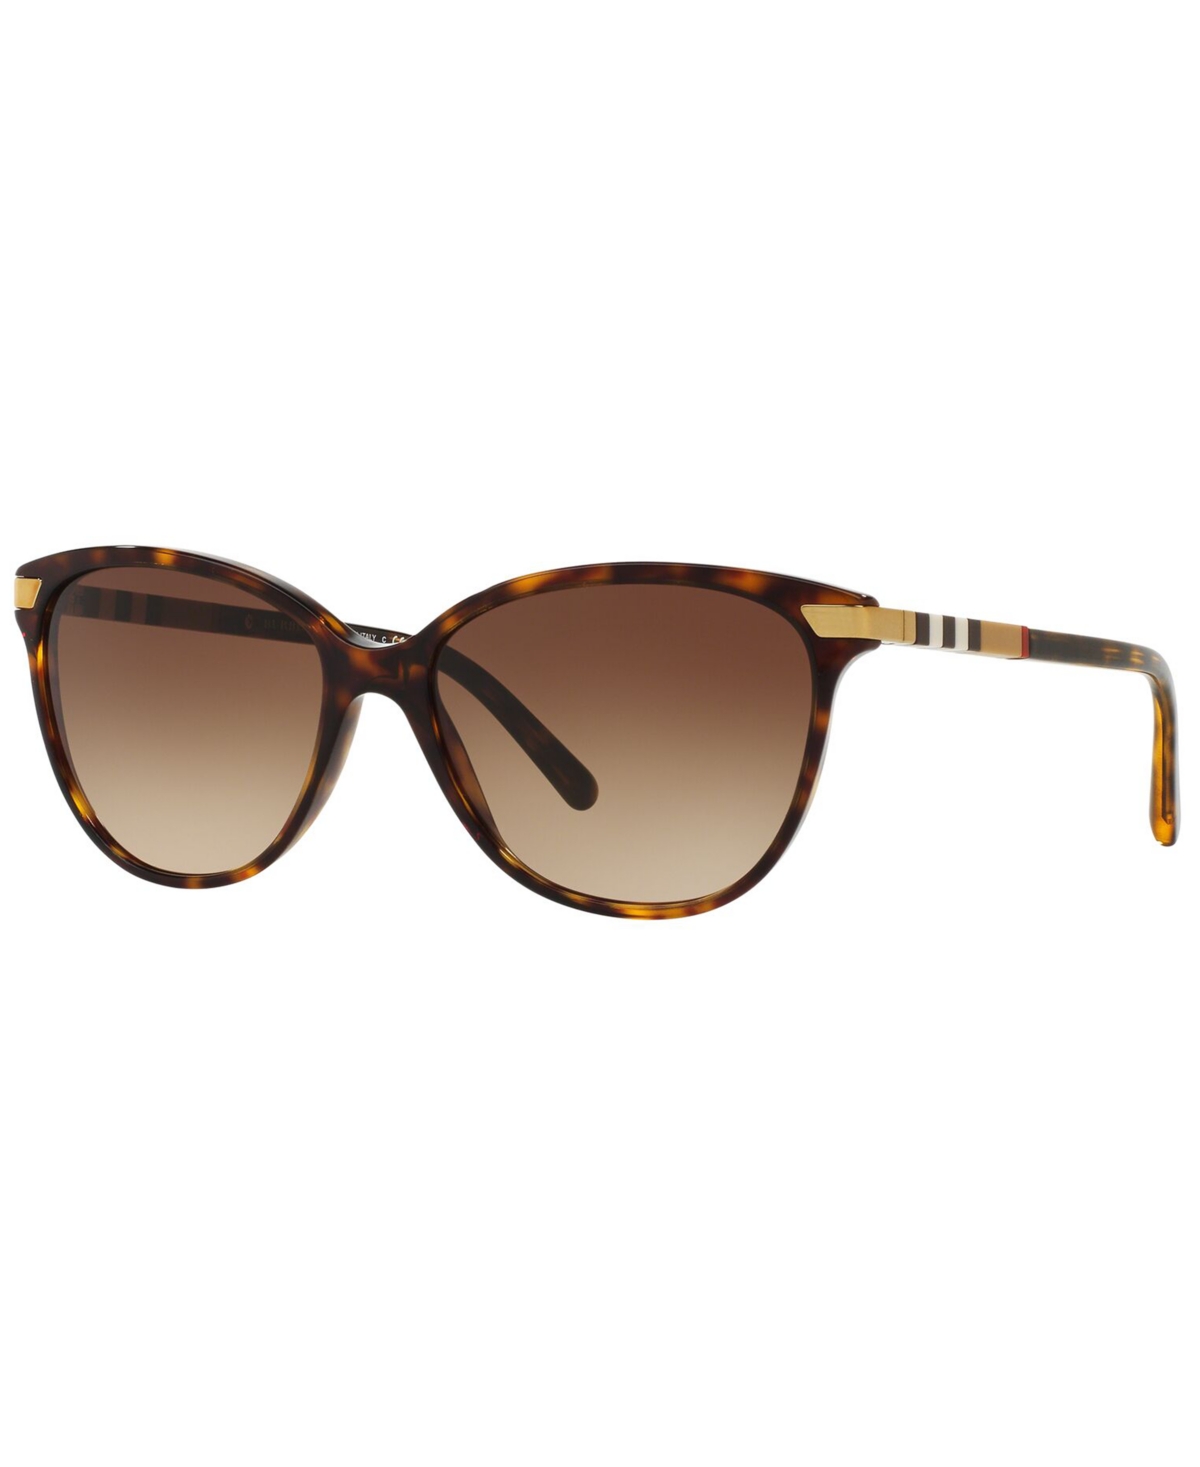 Burberry Gradient Sunglasses, Be4216 In Tortoise,brown Gradient